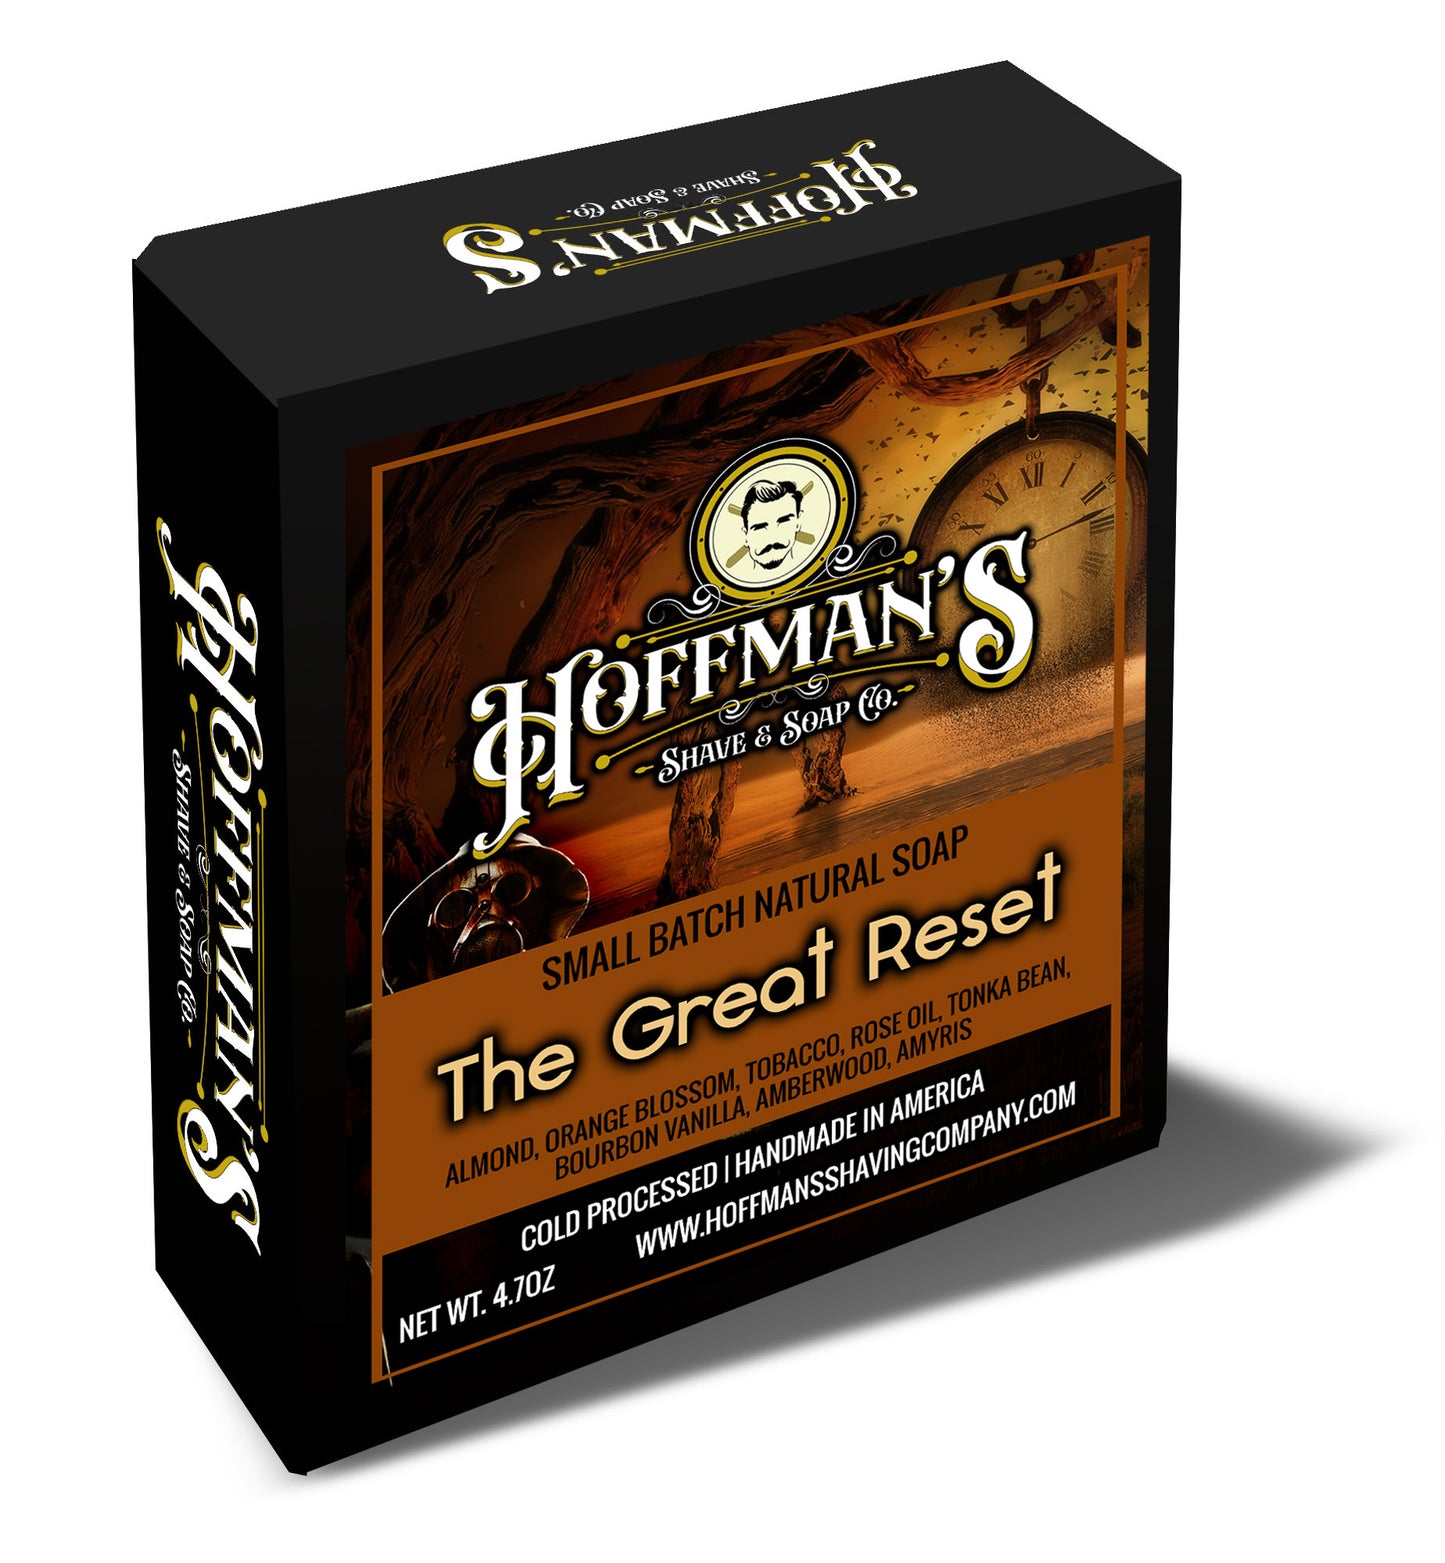 "The Great Reset" (Tonka, Bourbon Vanilla, Almond) Bar Soap